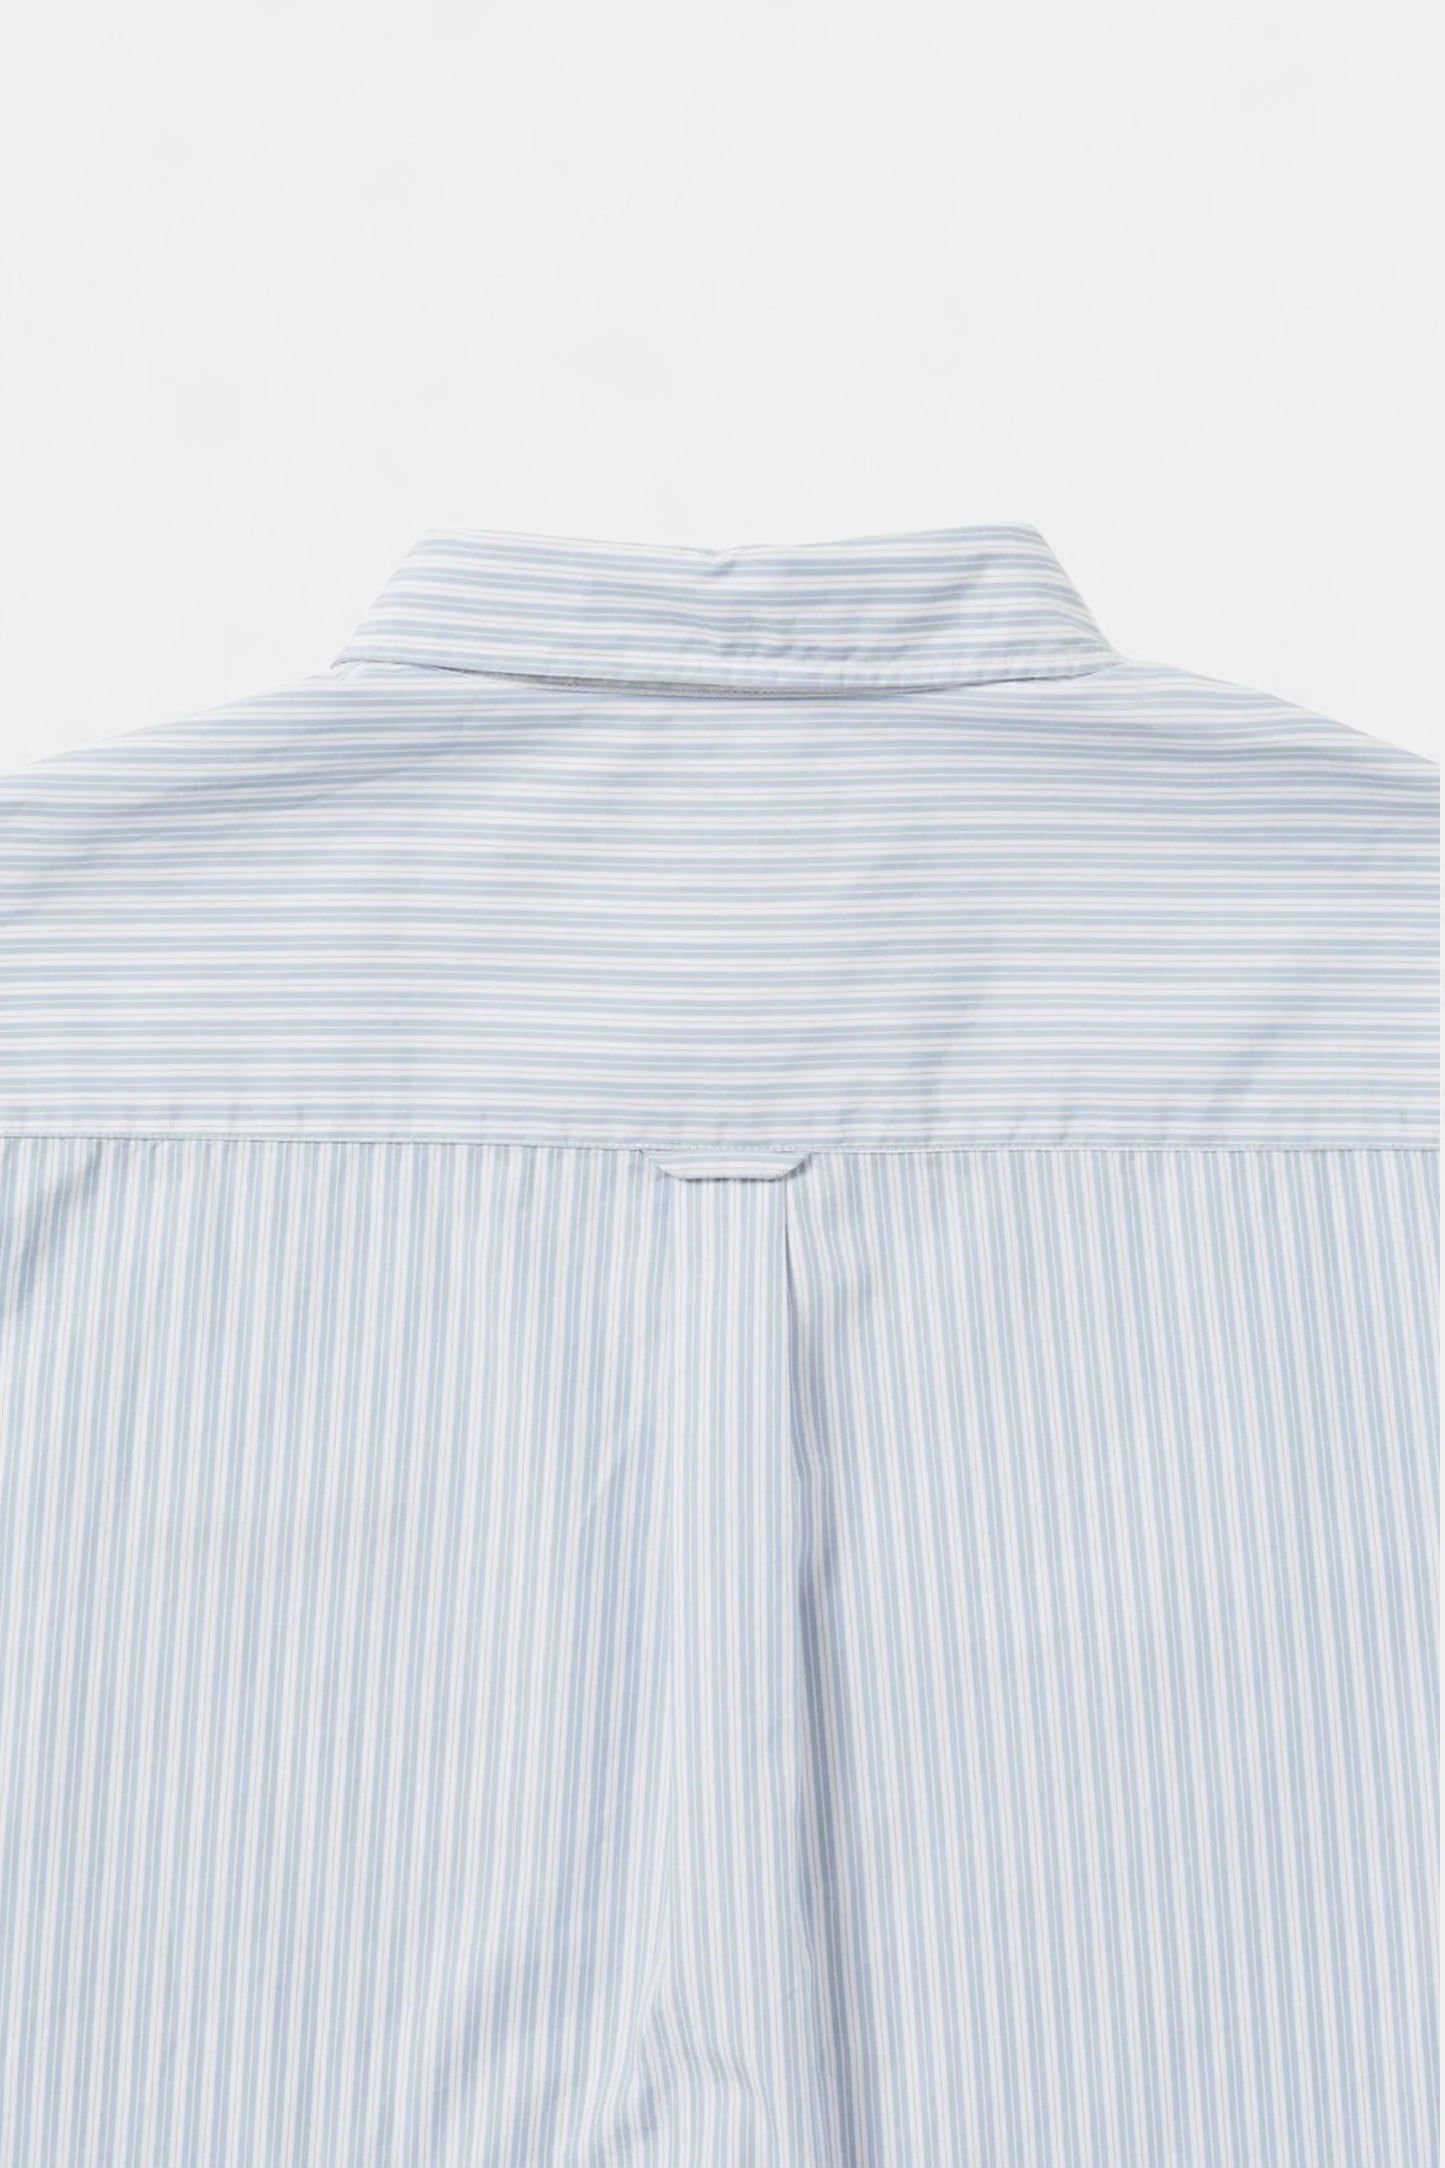 thisisneverthat - DSN Striped Shirt (Blue)